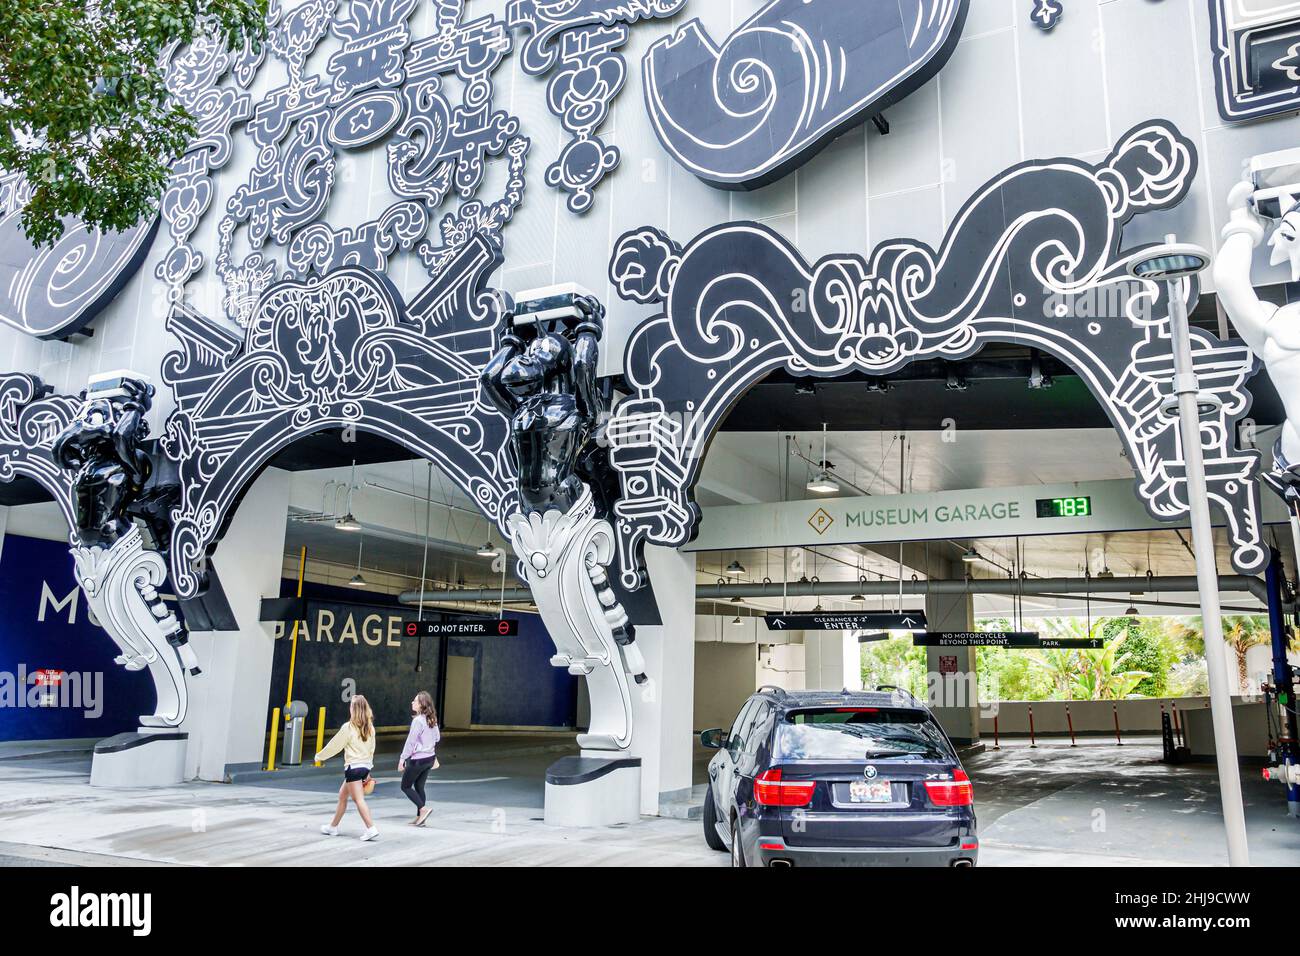 Miami parking facility Museum Garage combines several exterior designs